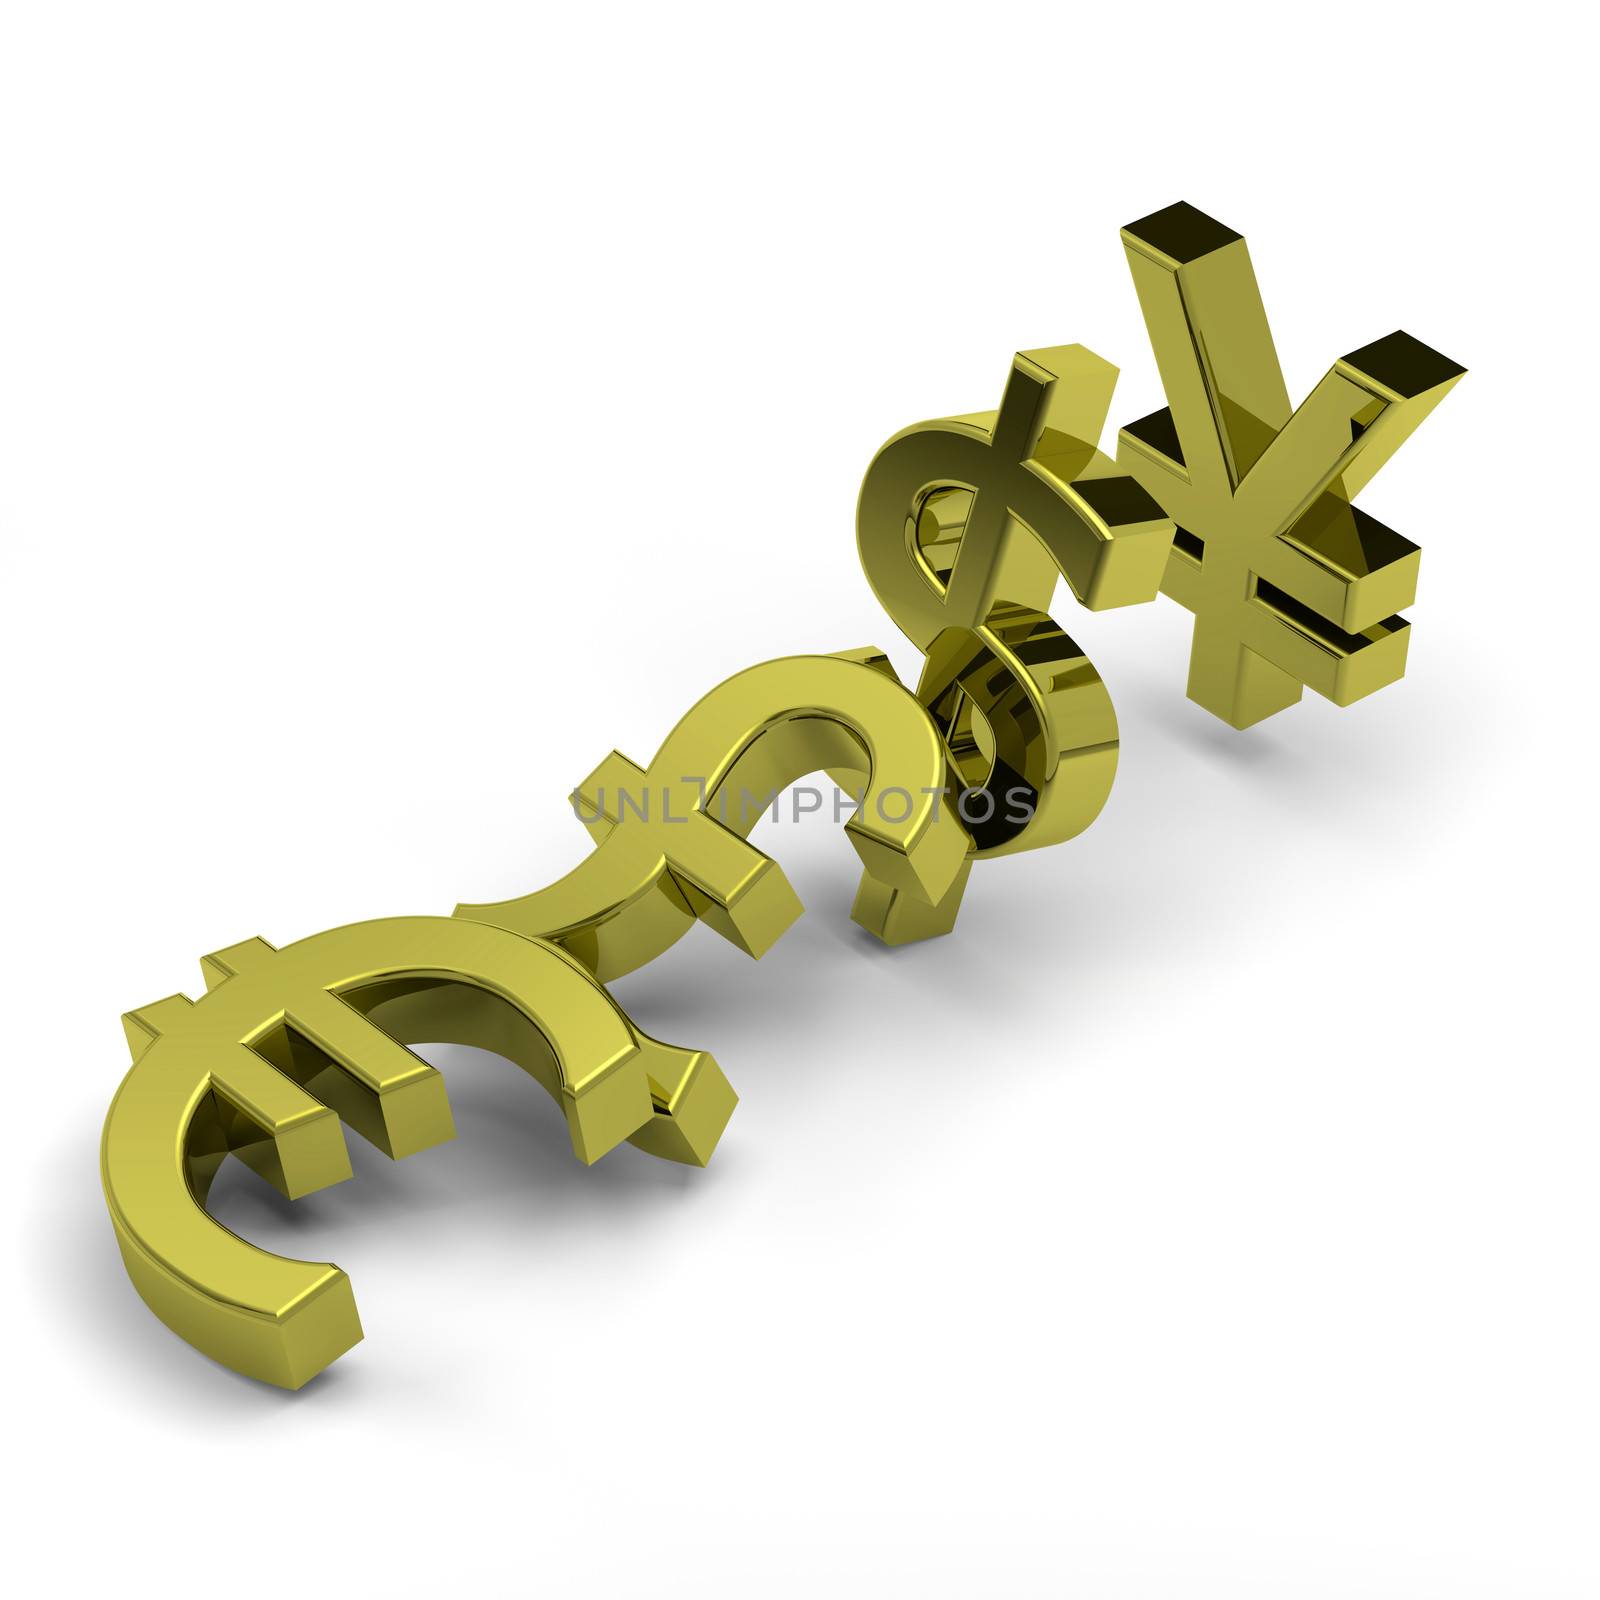 3D golden currency symbols set domino effect on white background illustration, crisis concept